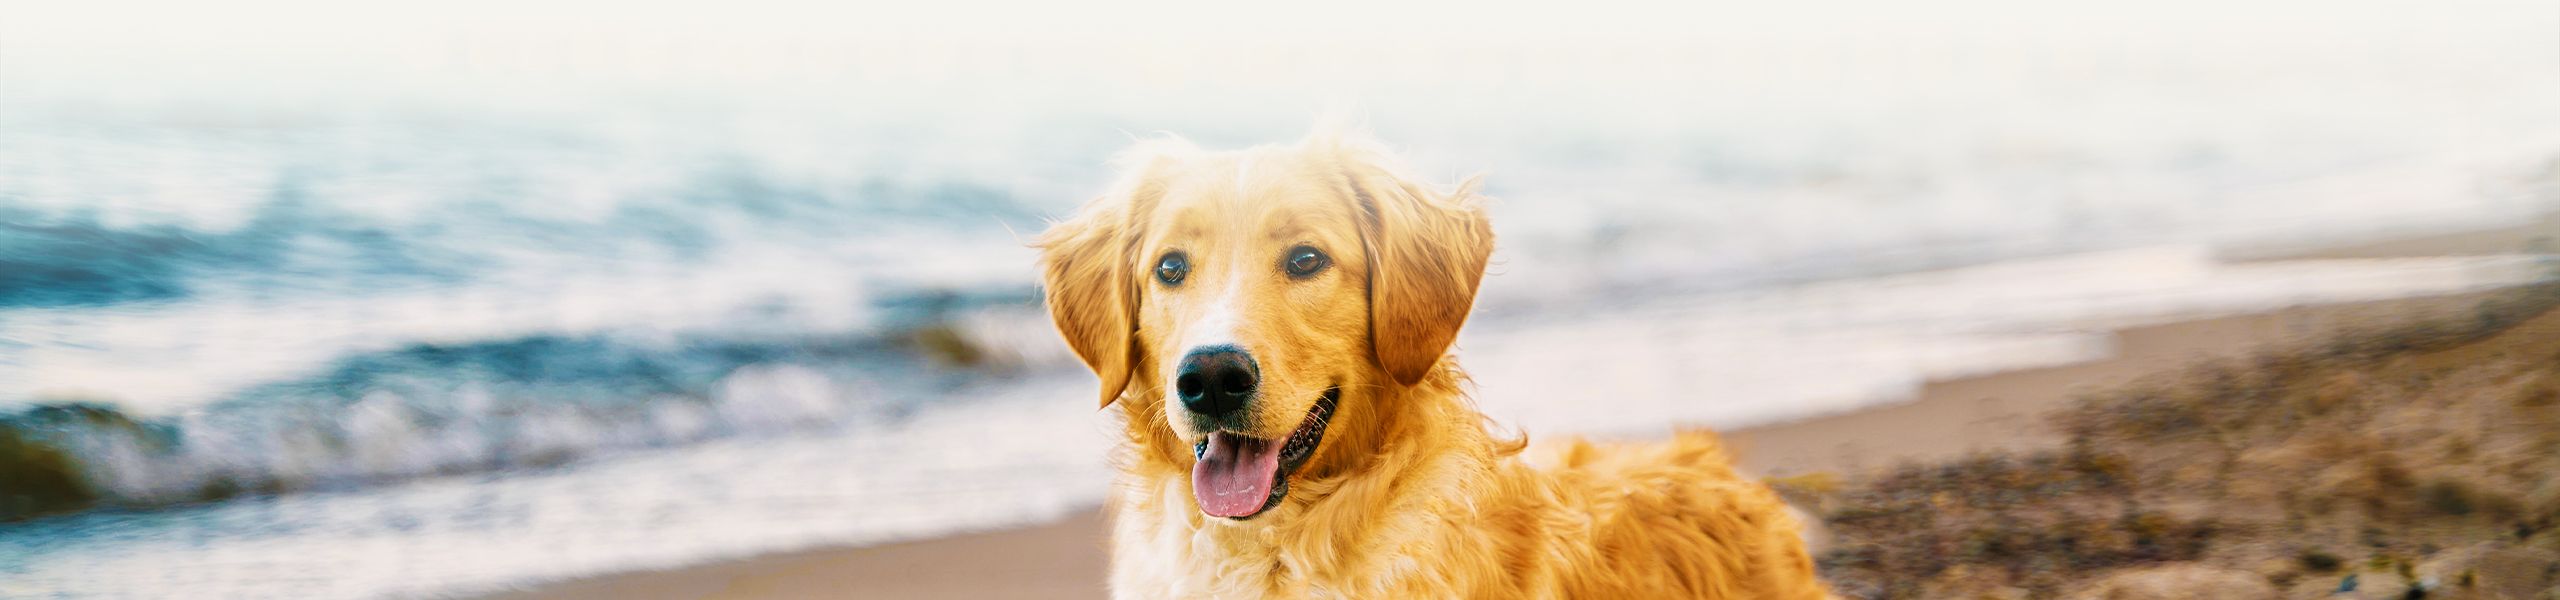 smiling golden retriever dog in the beach